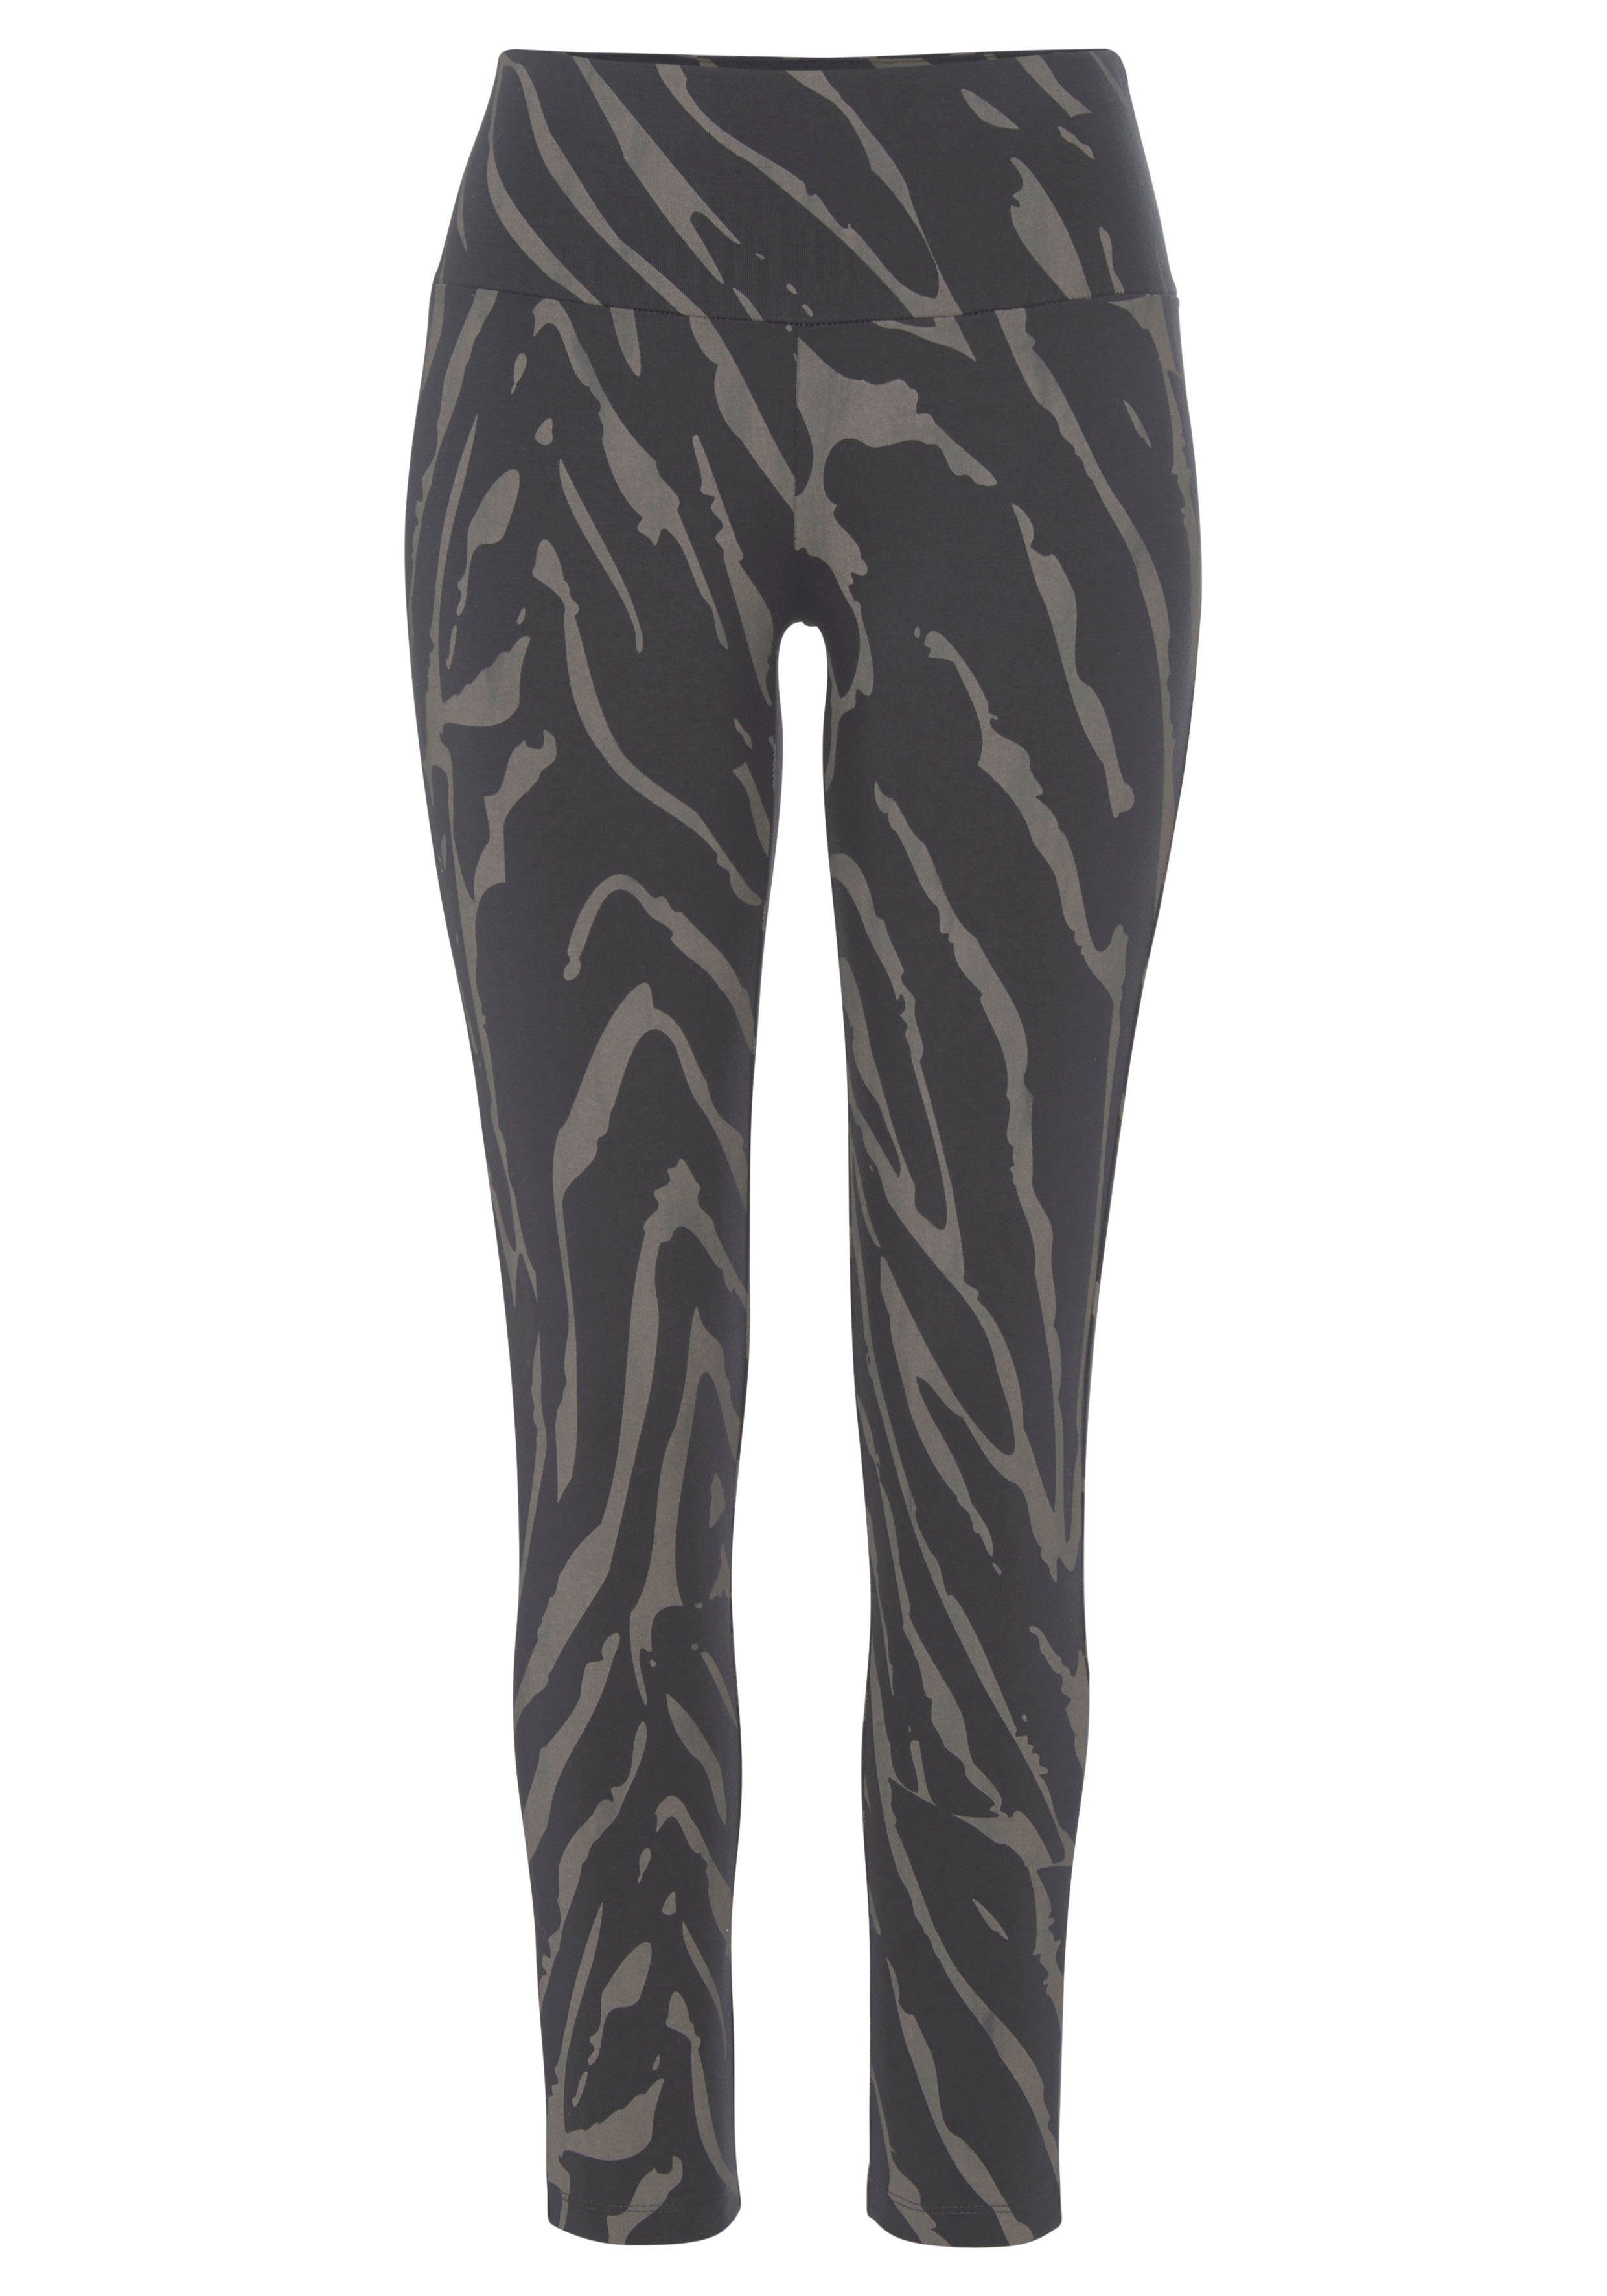 LASCANA Leggings -Loungehose mit Zebramuster und Loungewear Bund, breitem dunkelgrau-taupe